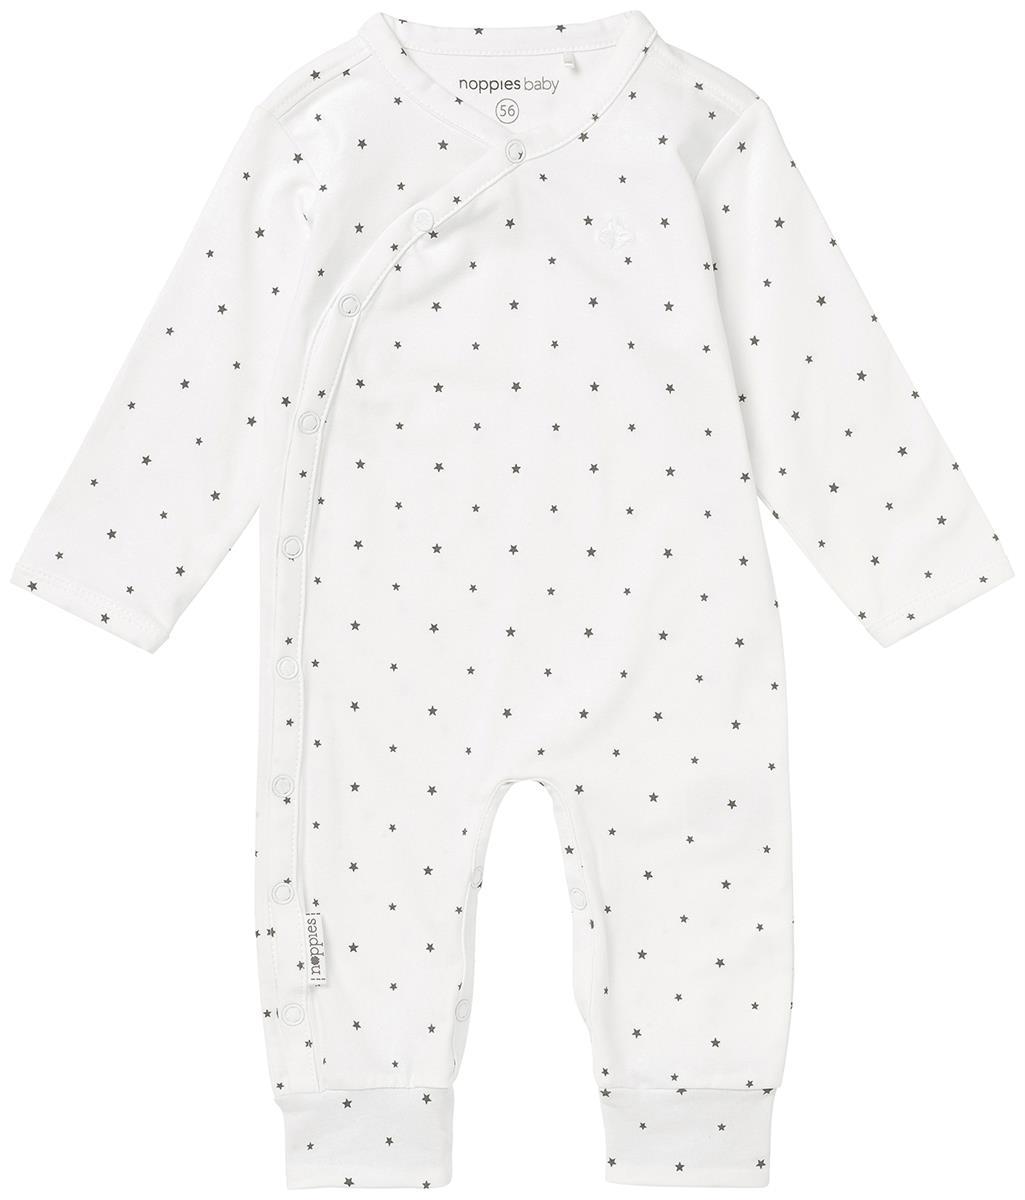 Sleepsuit - White With Star Print Sleepsuit / Babygrow Noppies 